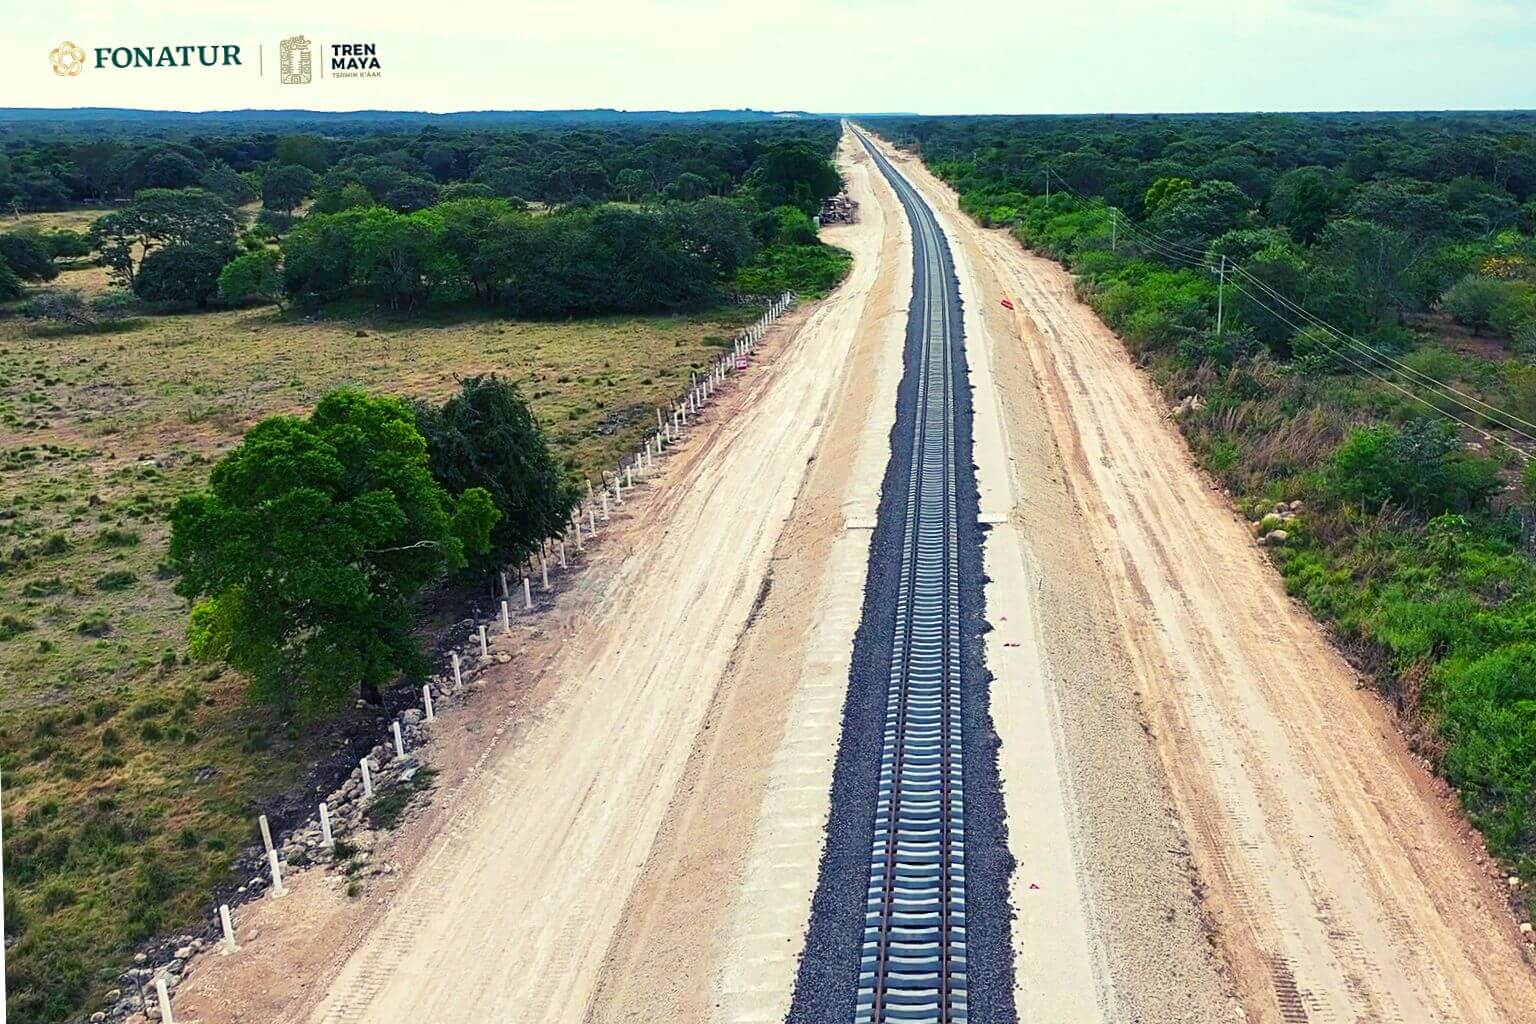 The Mayan Train tracks